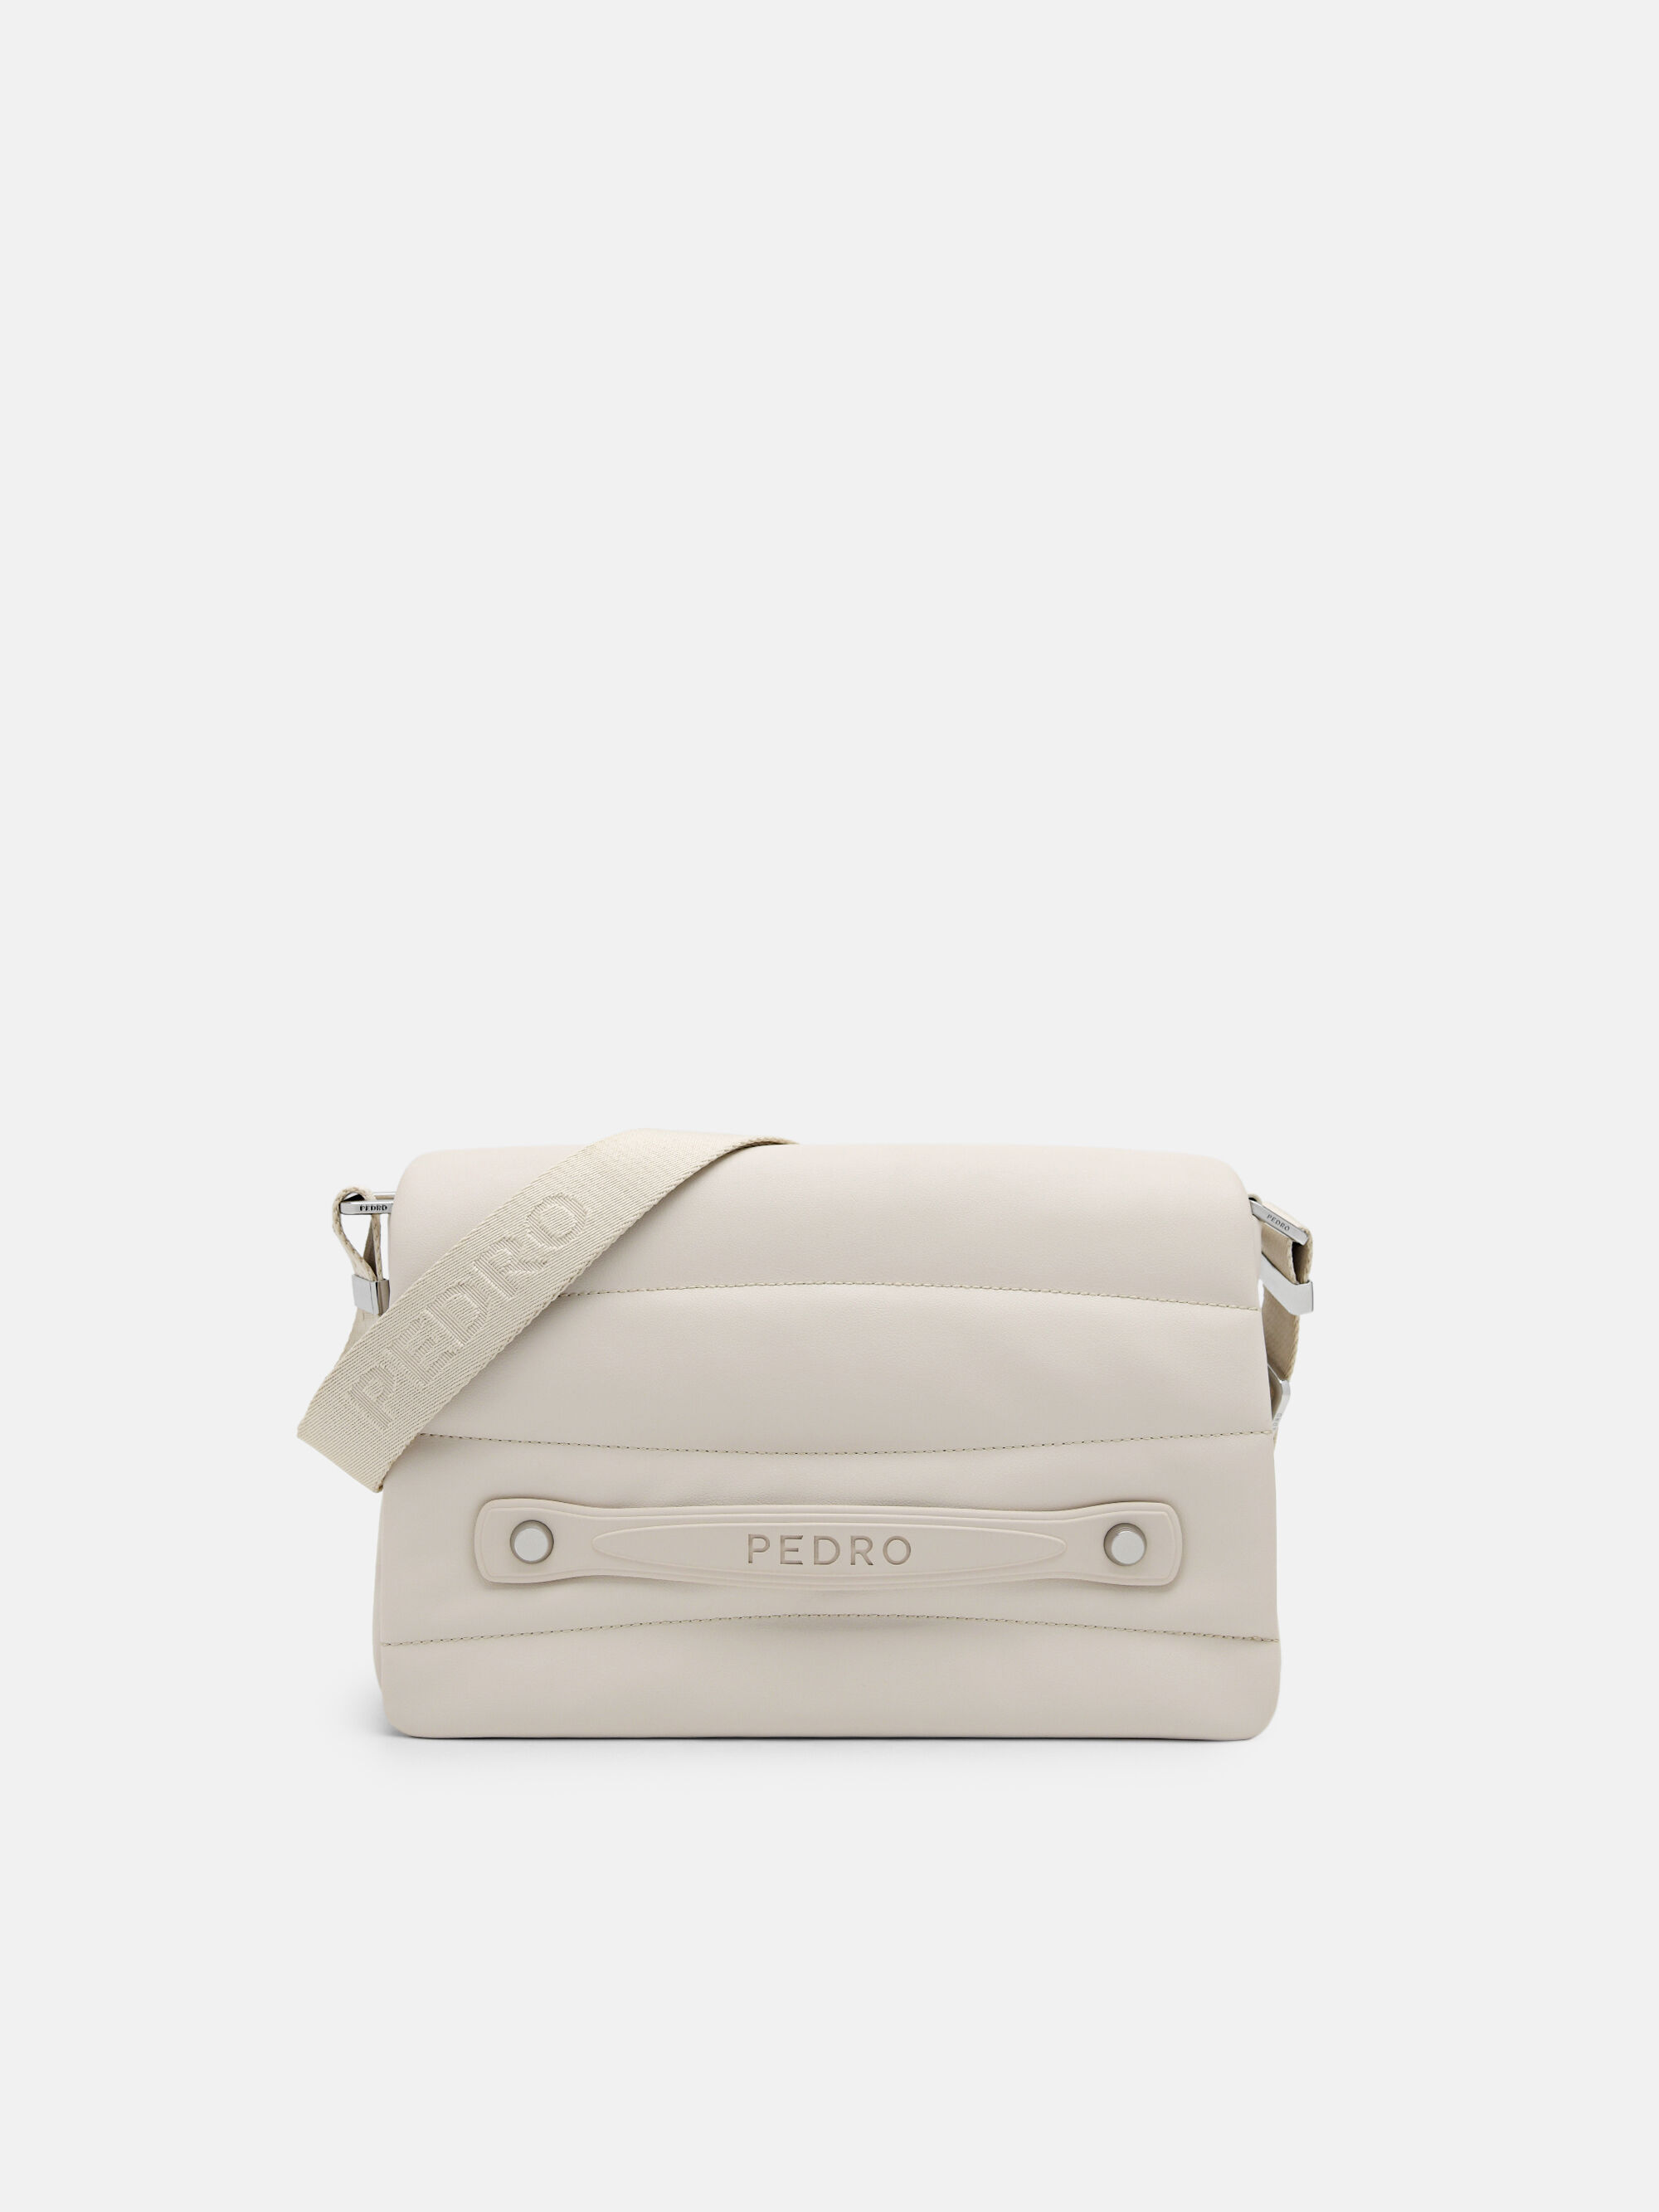 Shop Pedro Women's Handbags